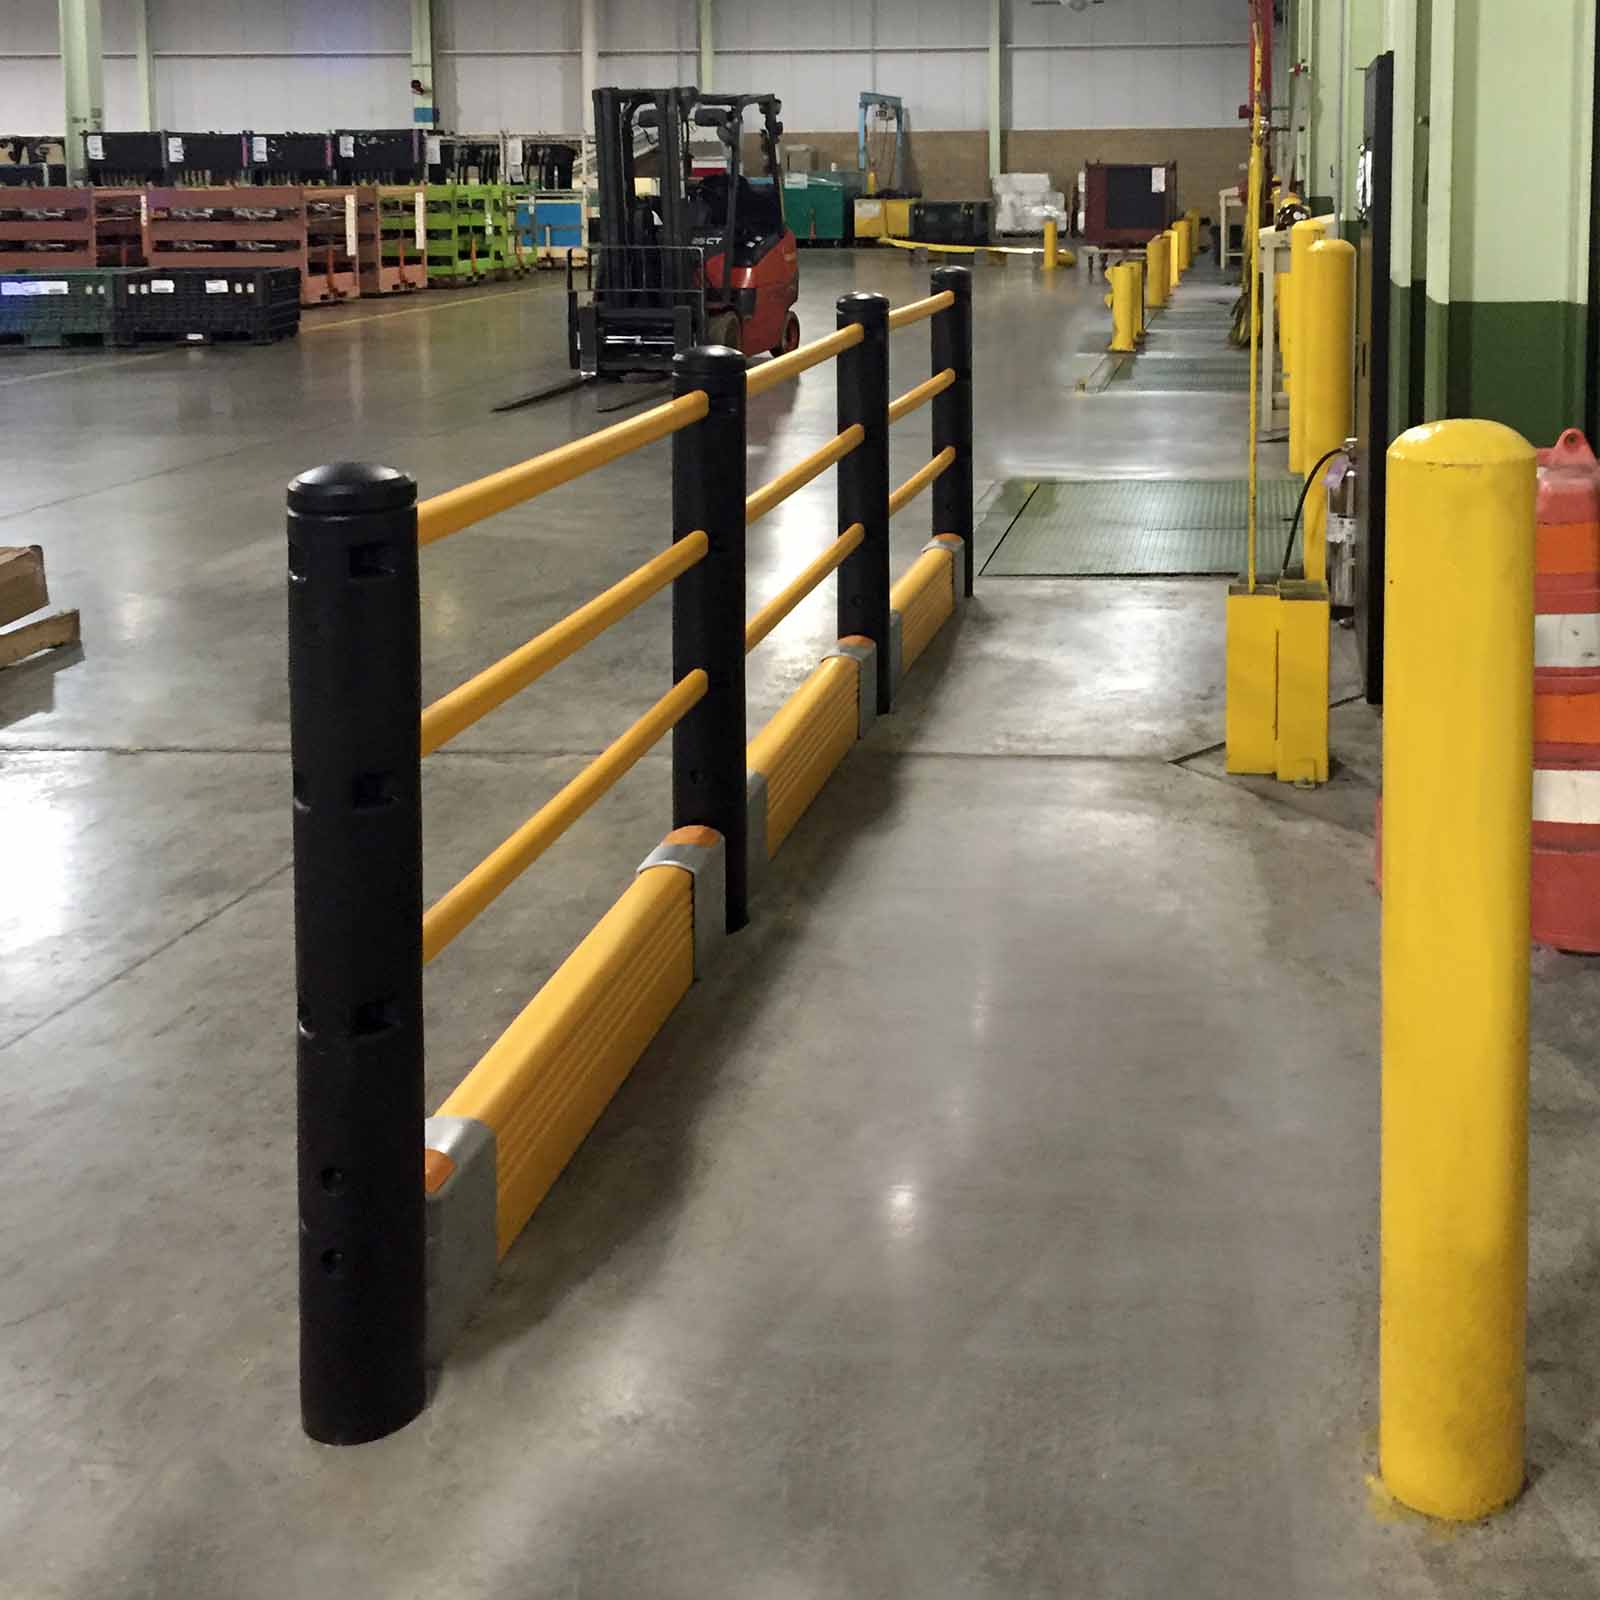 McCue行人屏障安全保护与地板安装防撞屏障在仓库